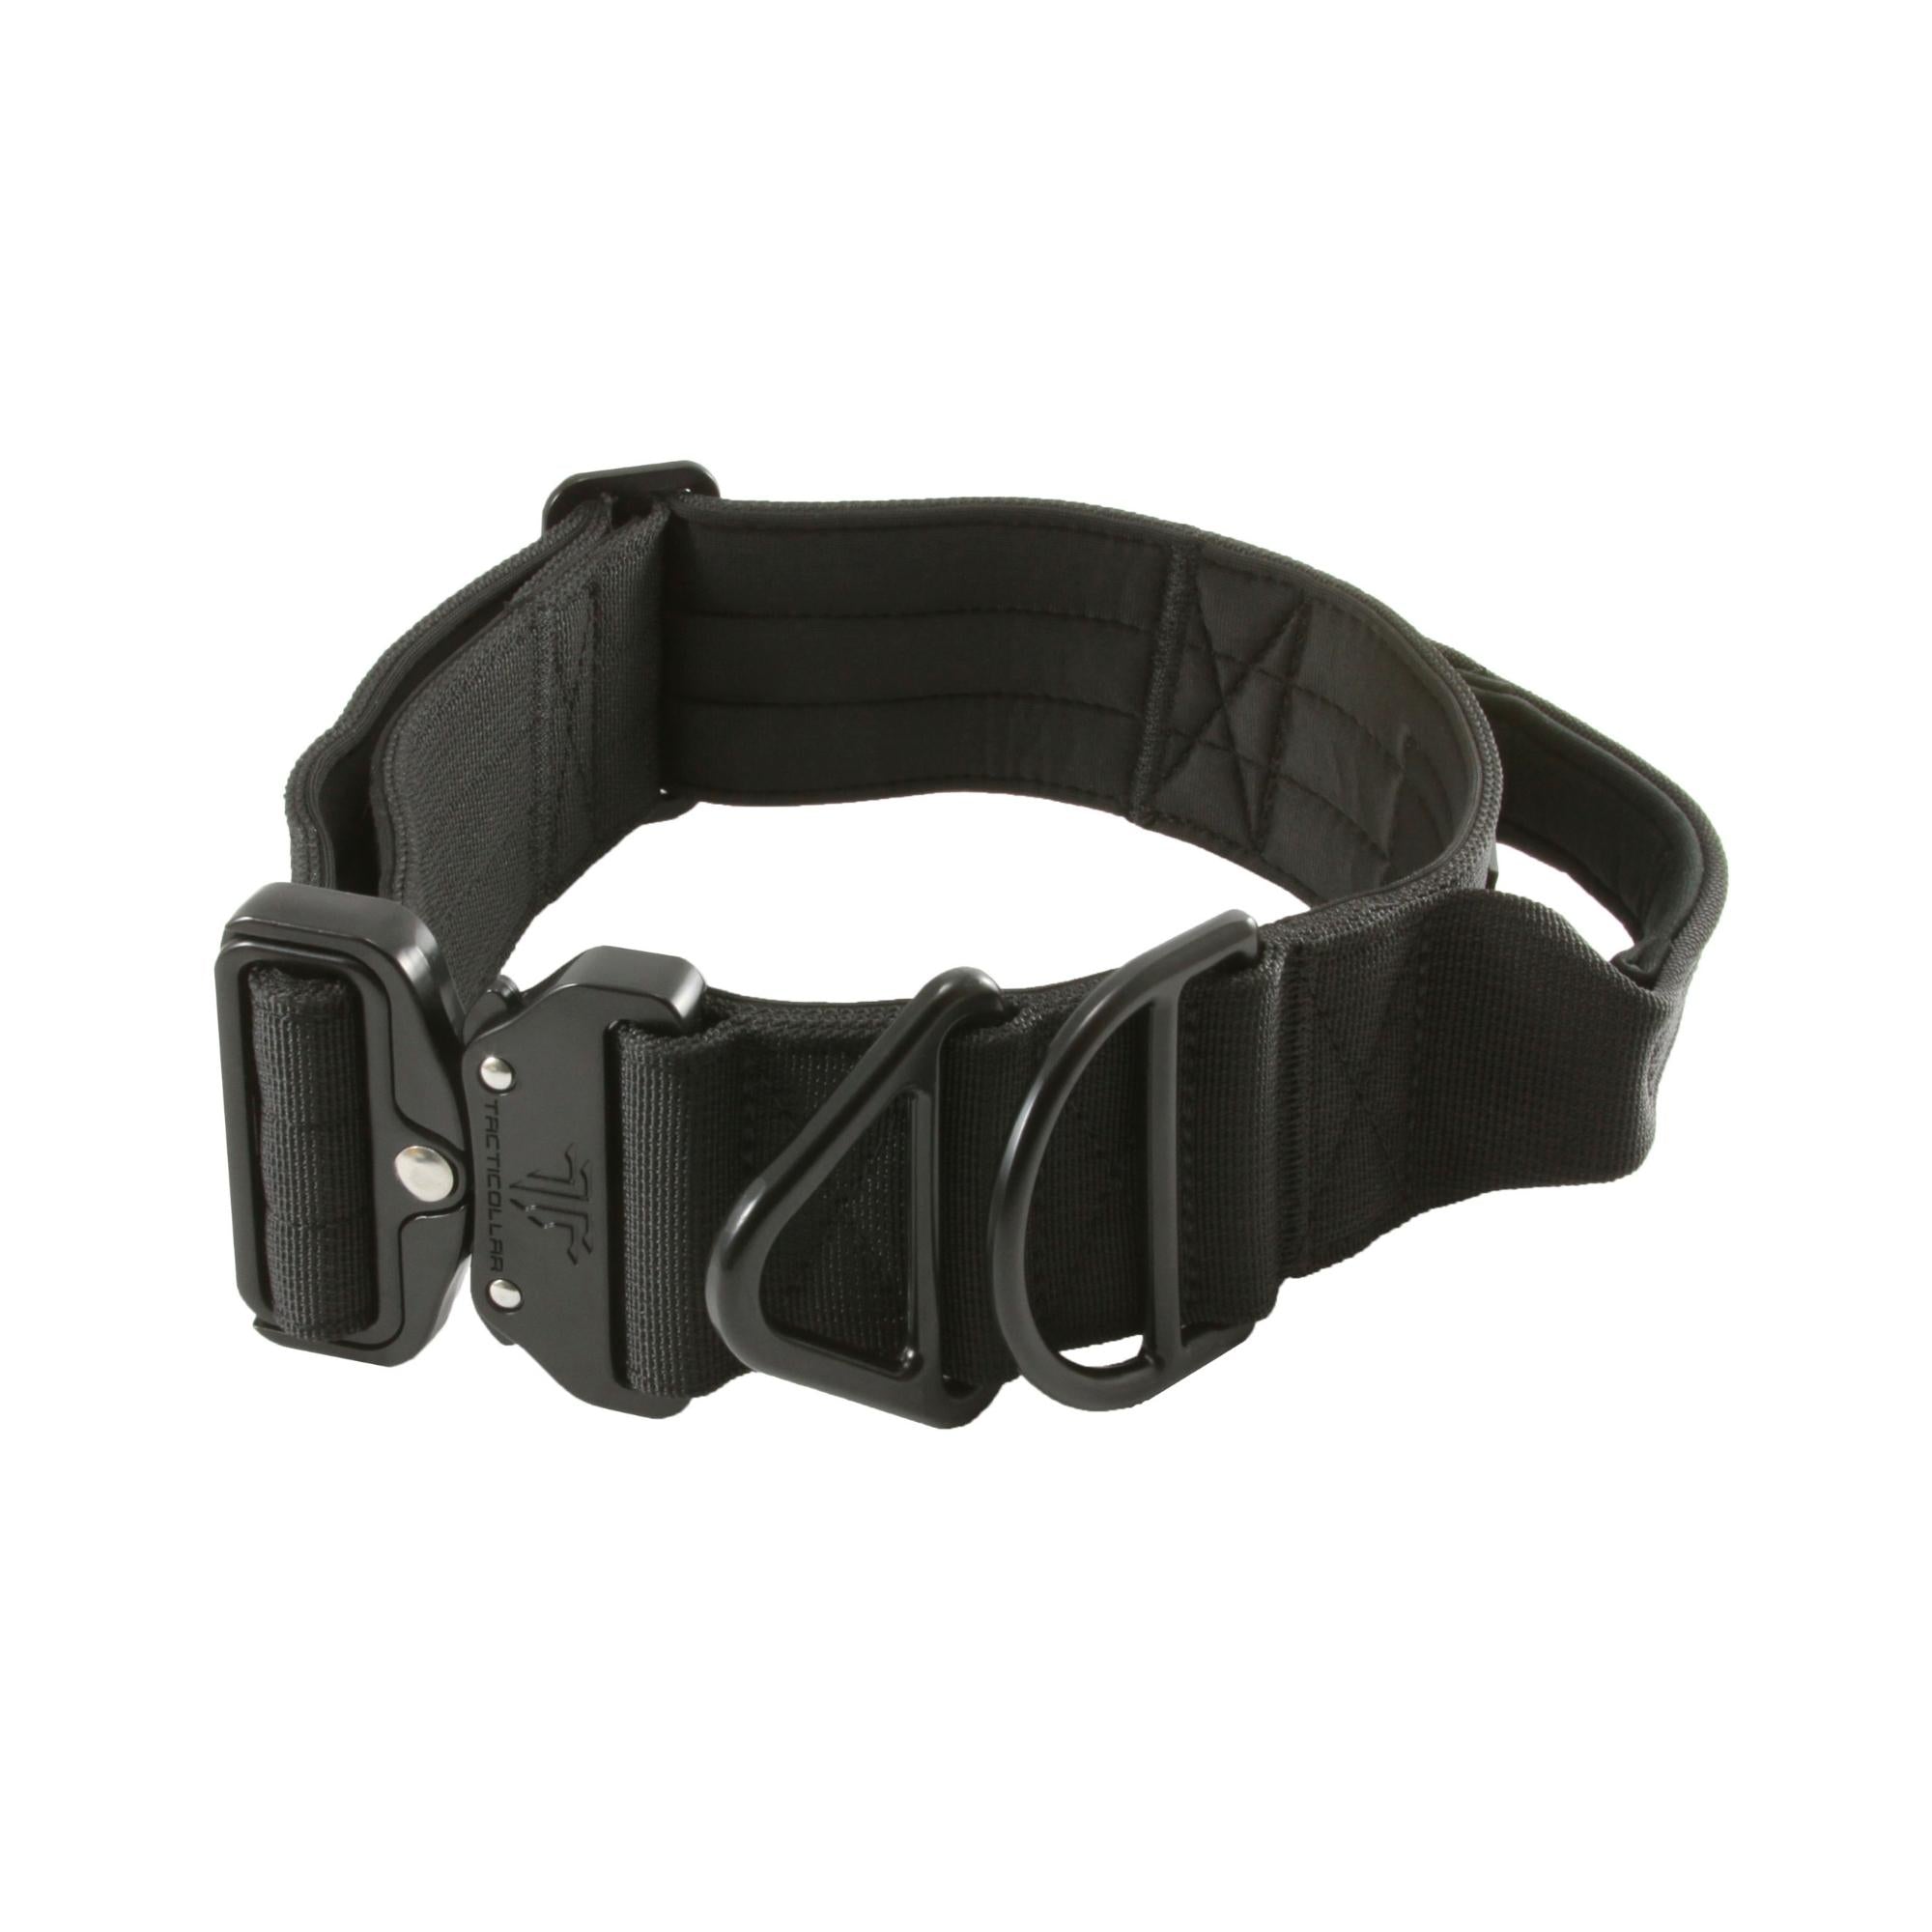 2 inch tactical dog collar black